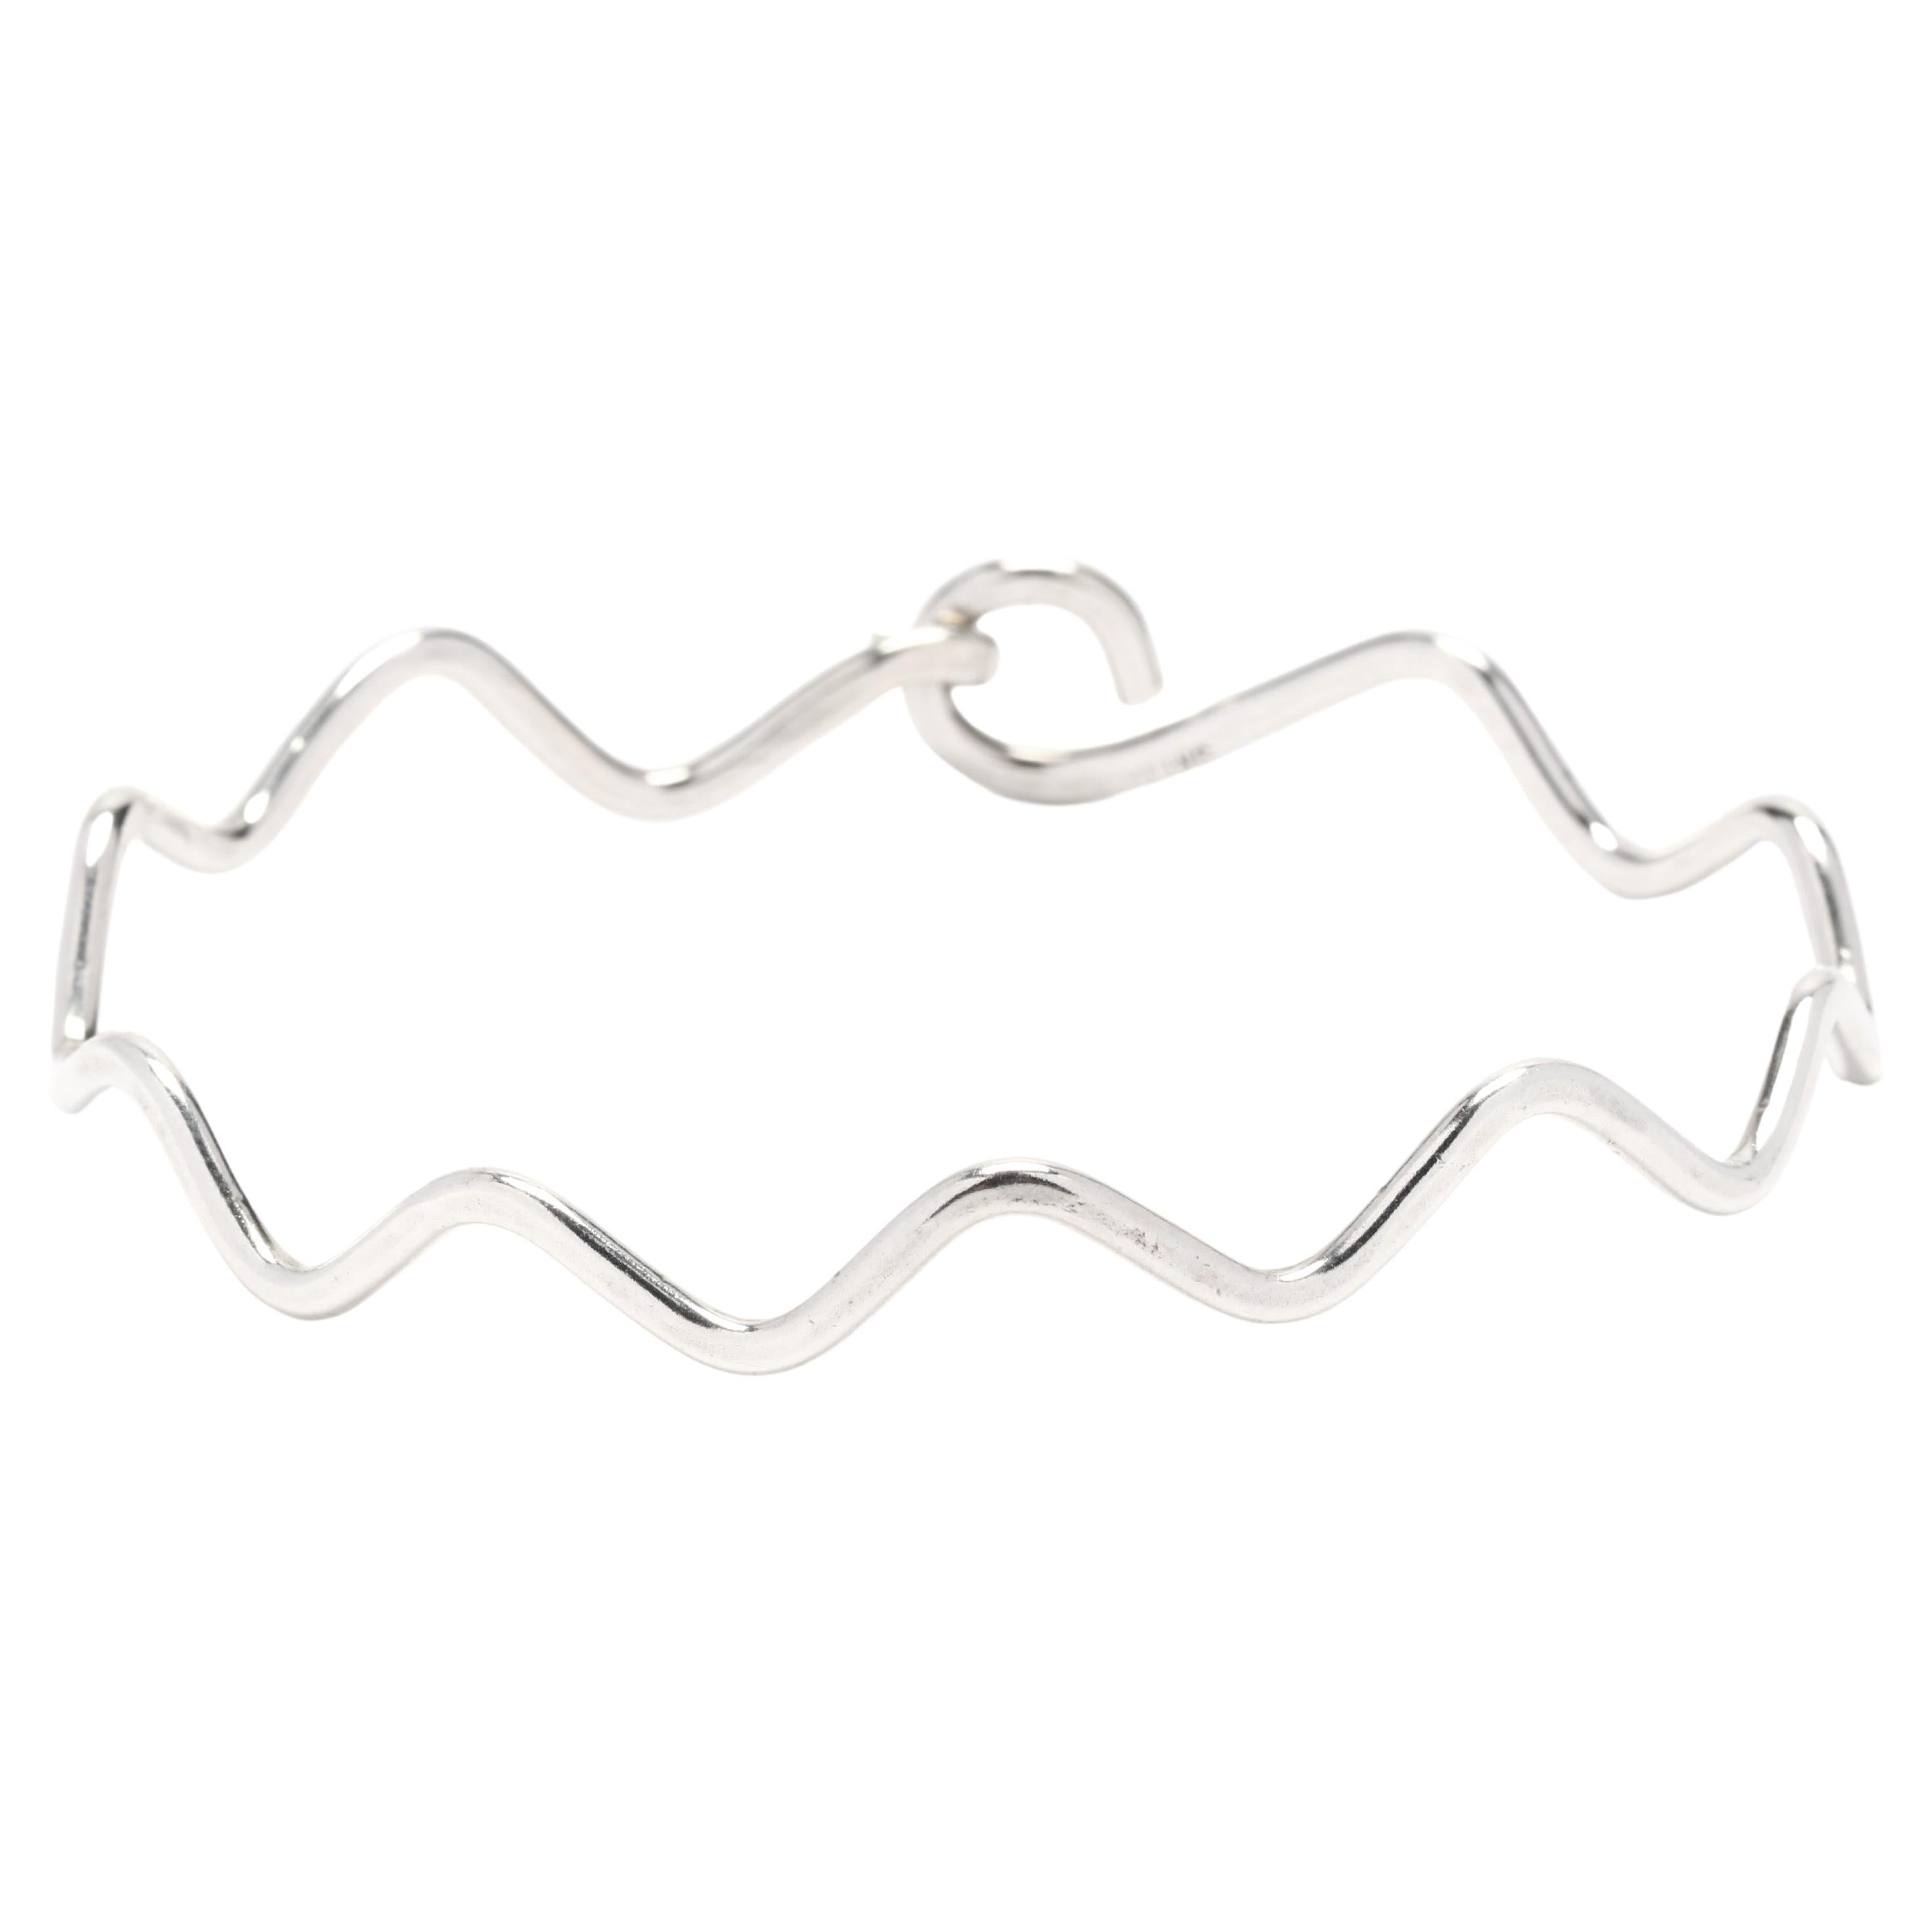 Zig-Zag Design Bangle Bracelet, Sterling Silver, Hook And Eye Clasp